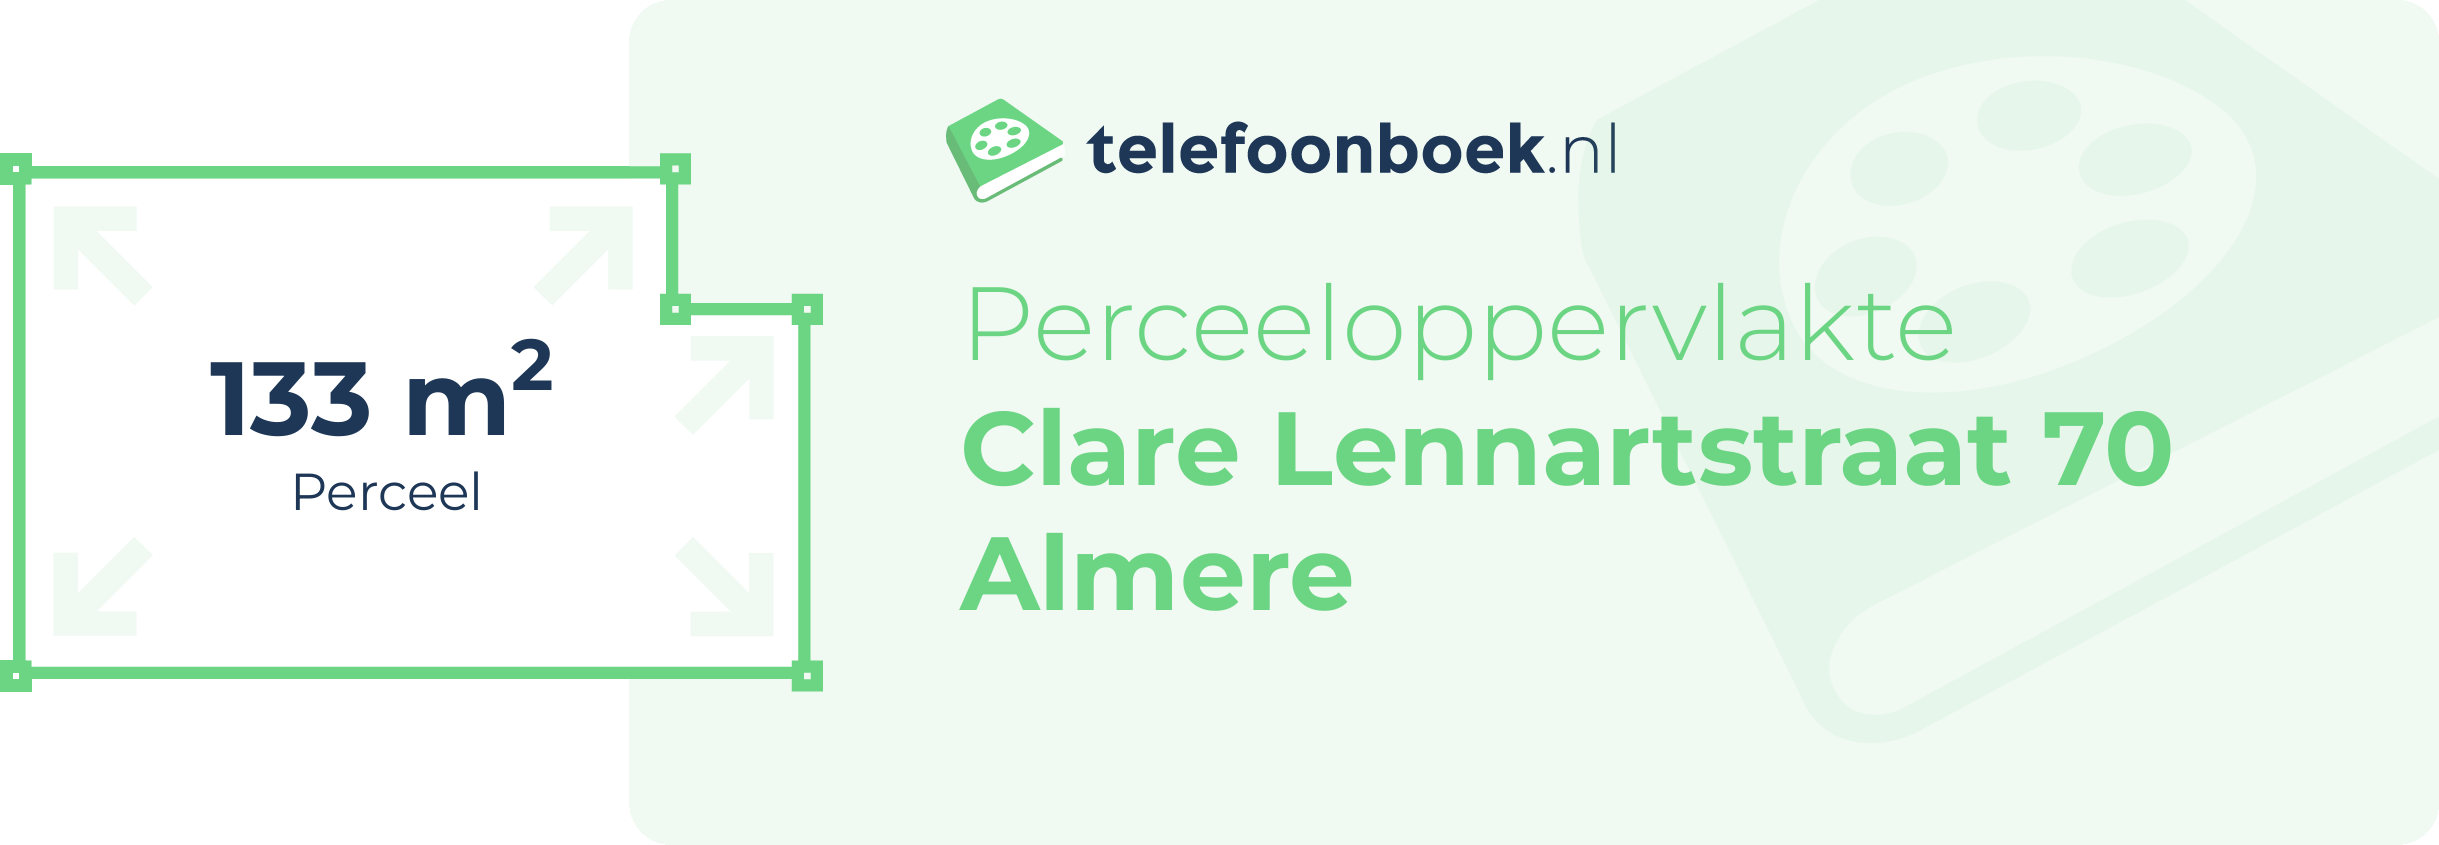 Perceeloppervlakte Clare Lennartstraat 70 Almere